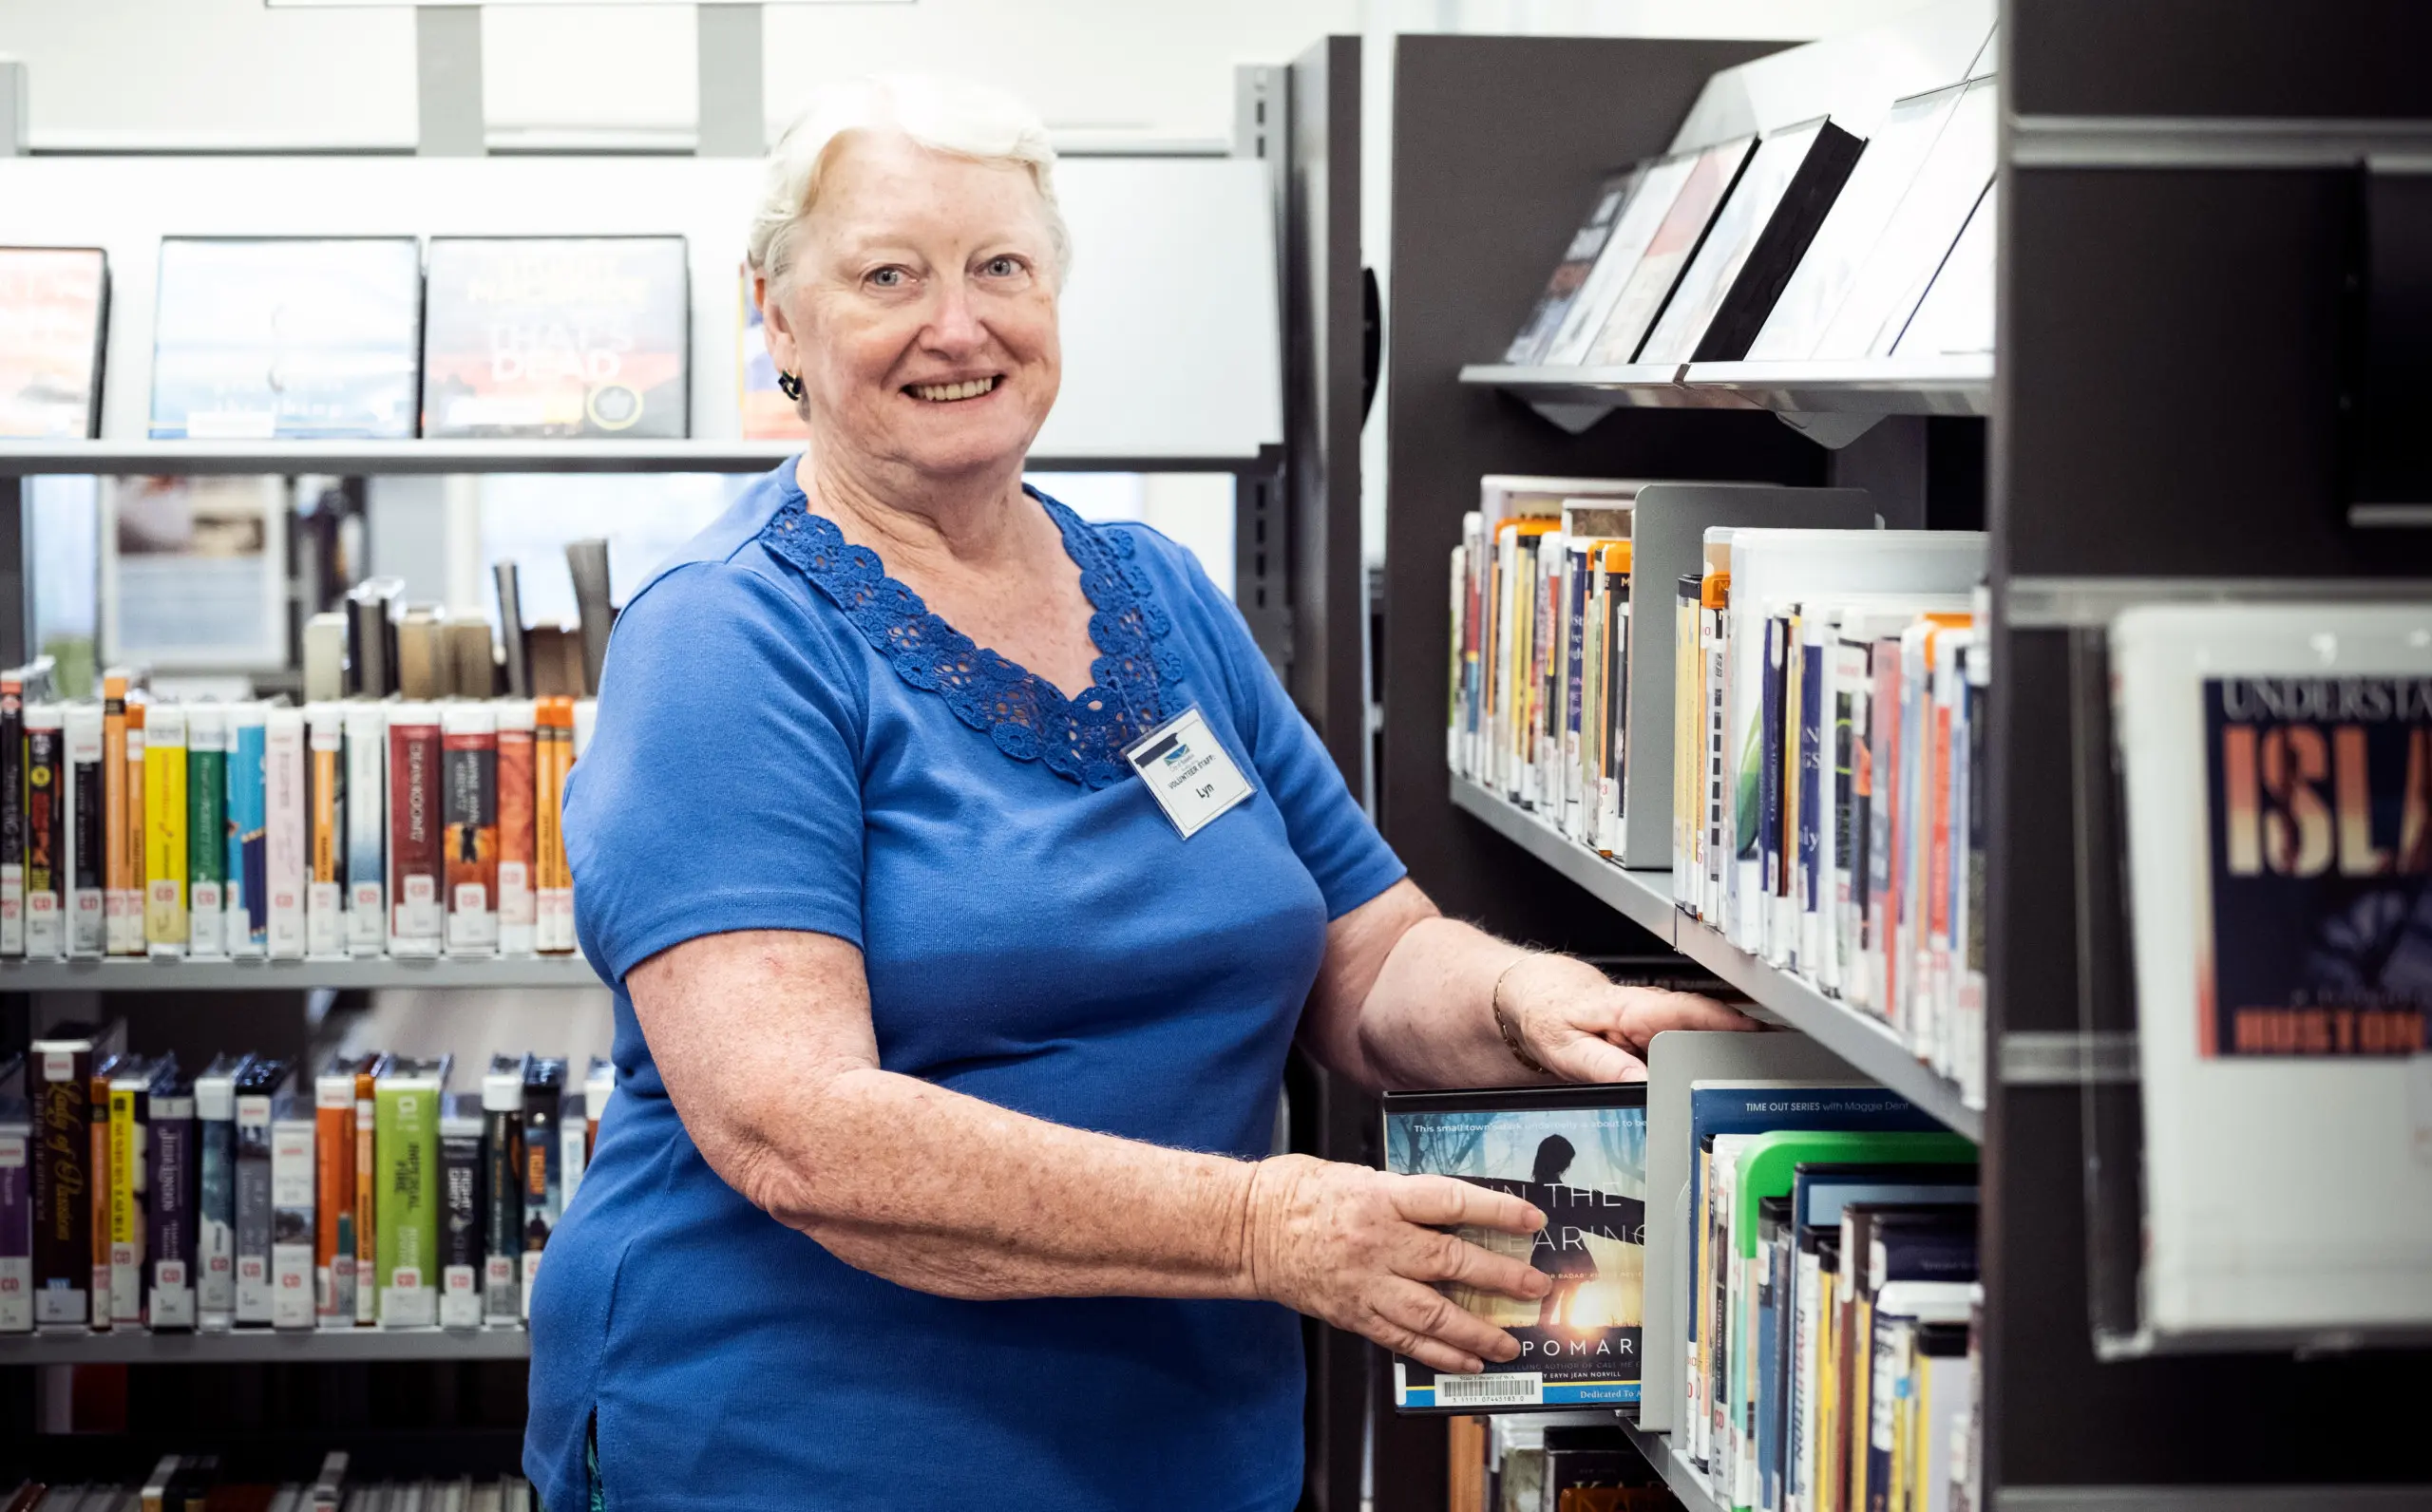 An older woman putting a DVD onto a library shelf.